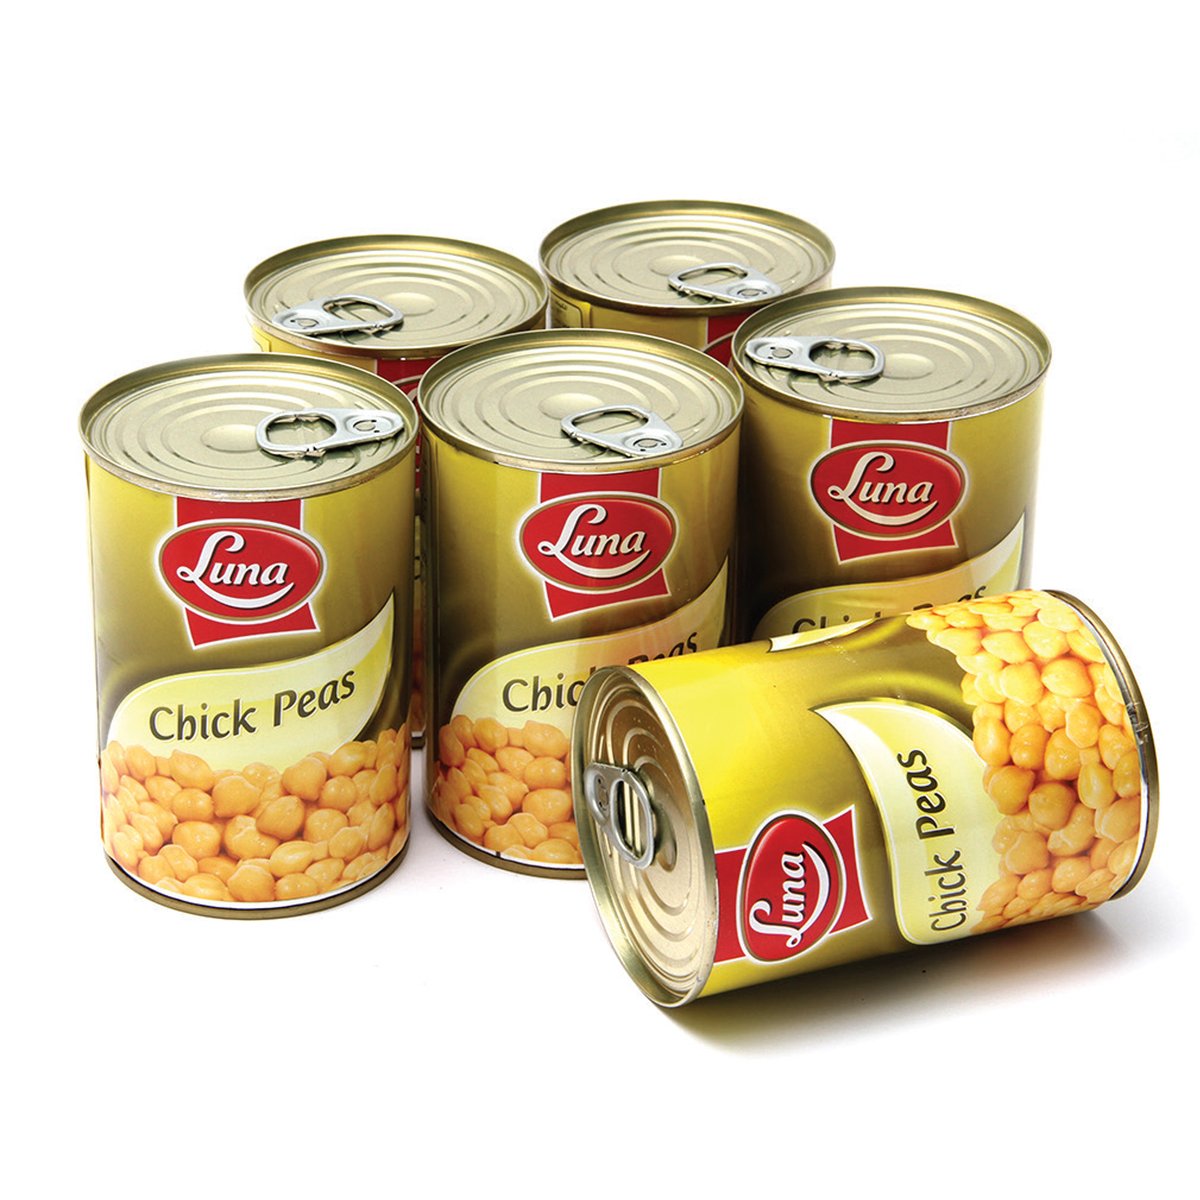 Luna Chick Peas Value Pack 6 x 380 g